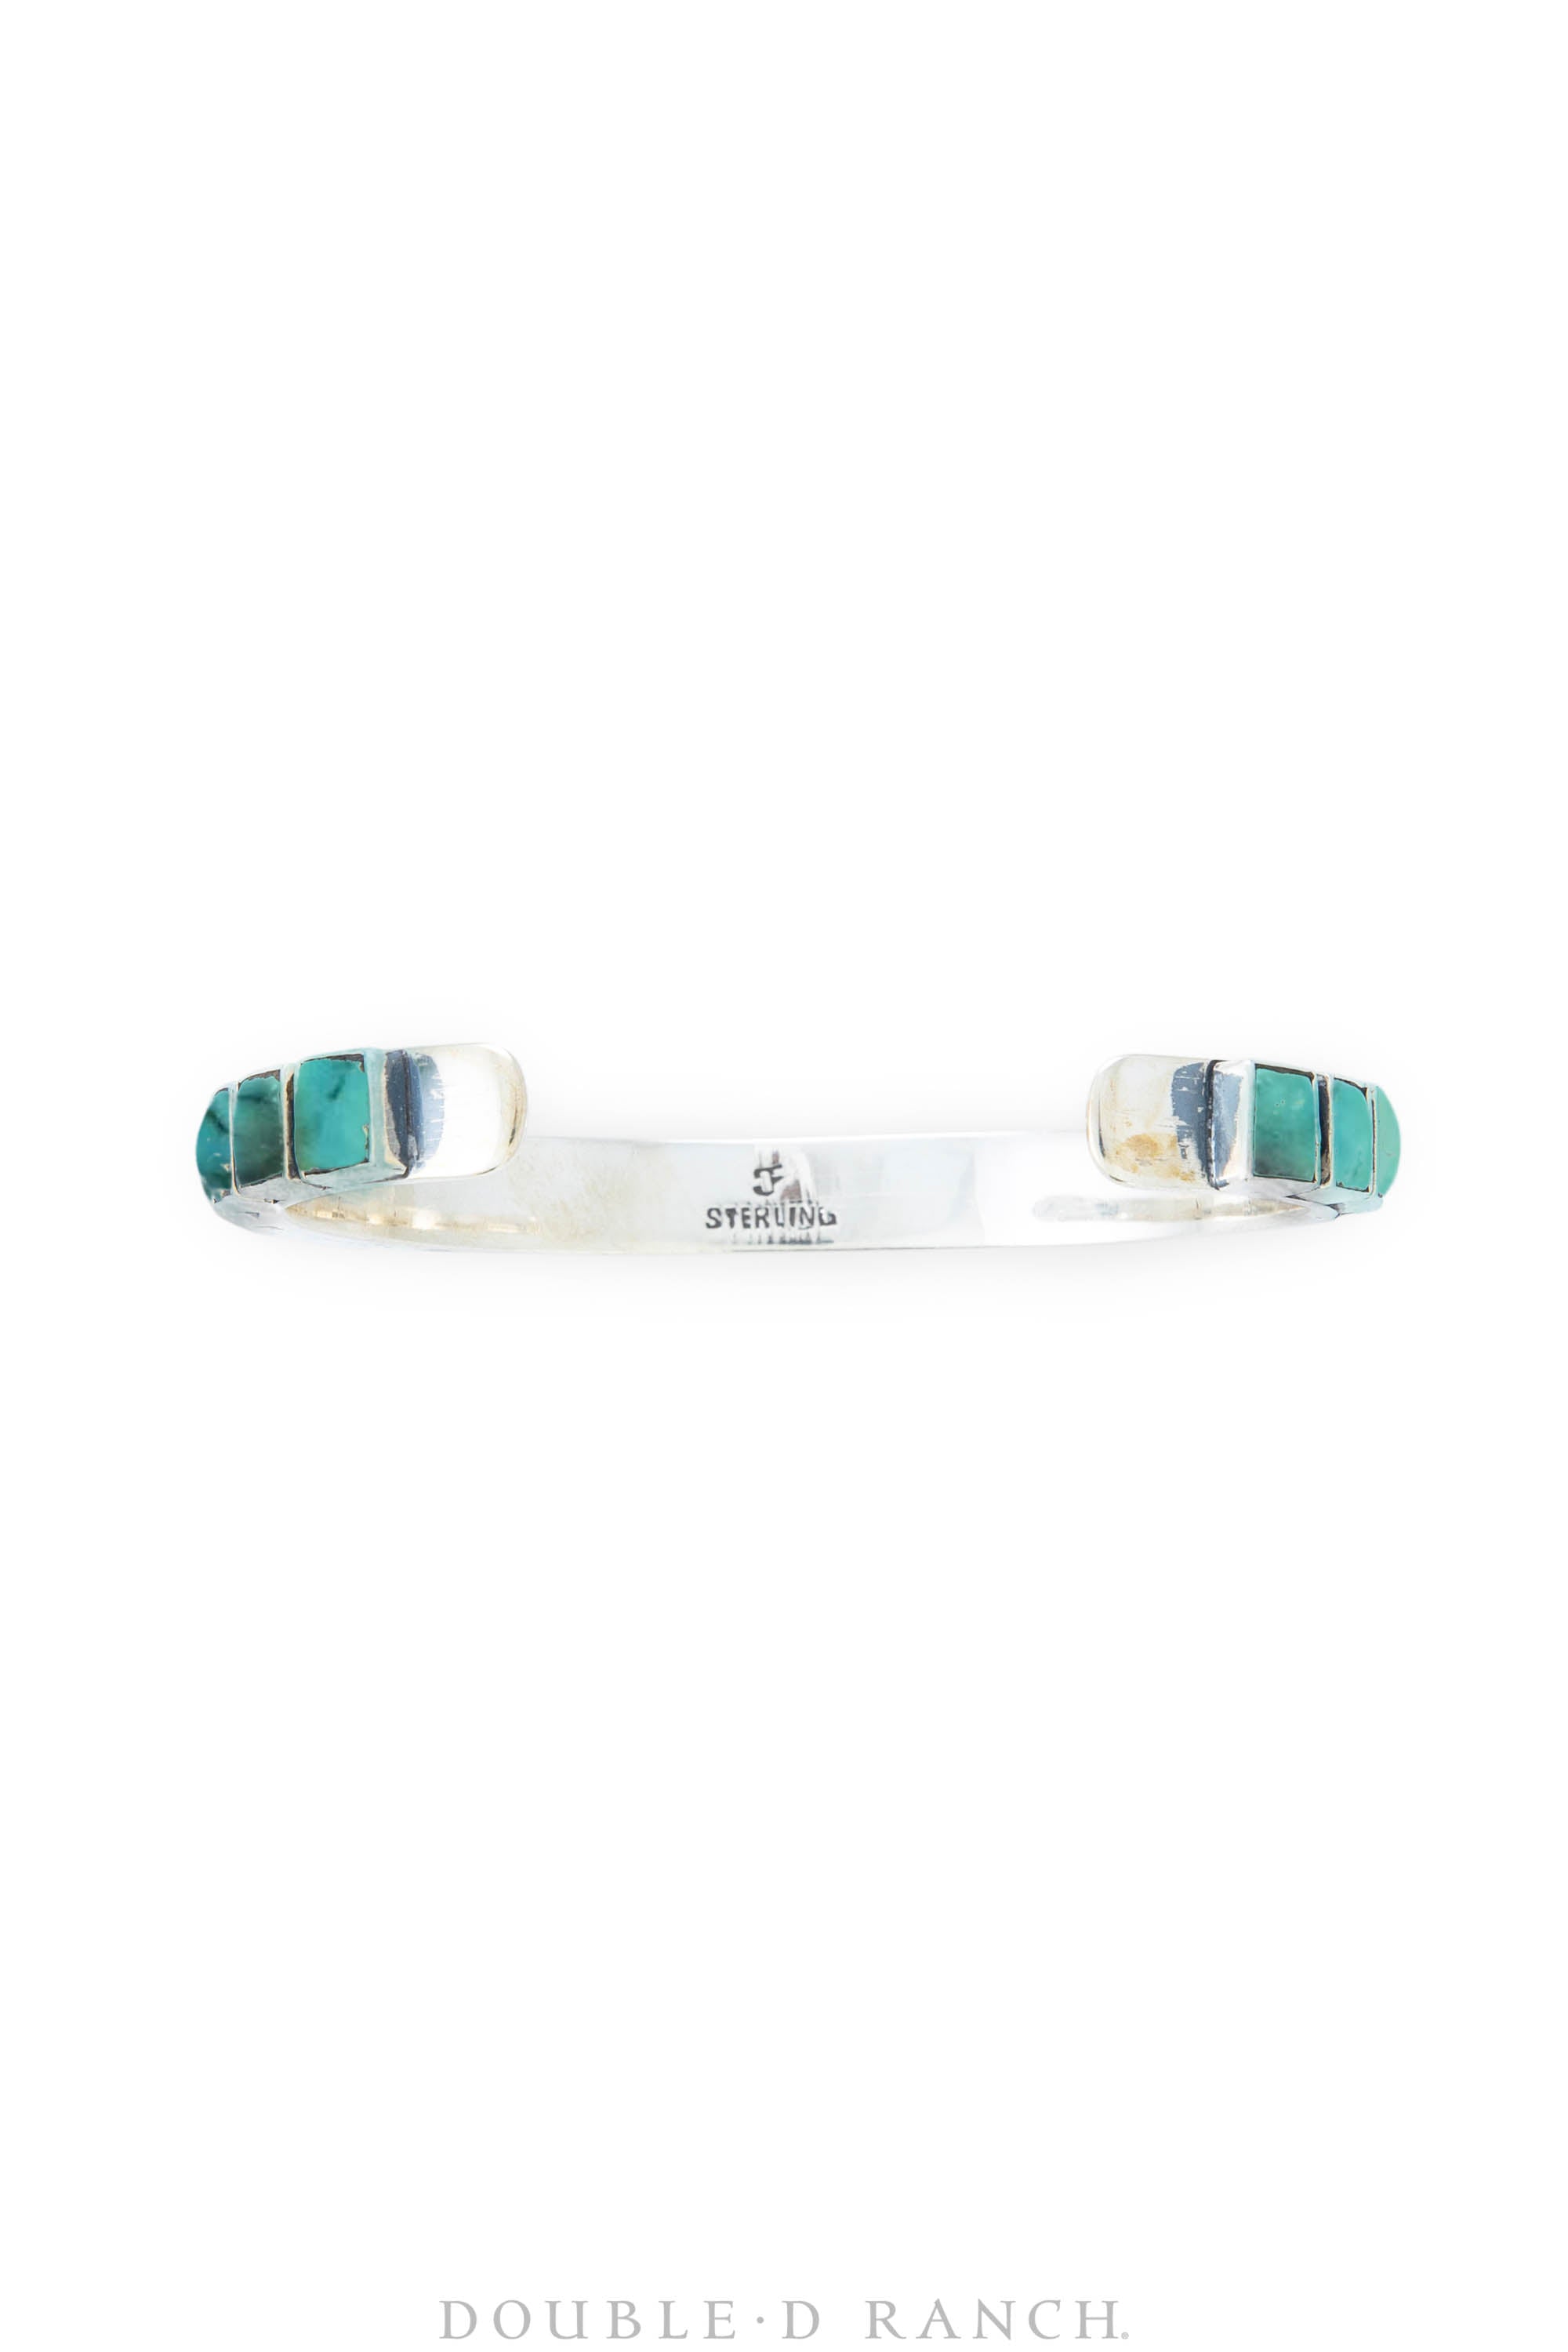 Two Row Turquoise Bracelet - #4